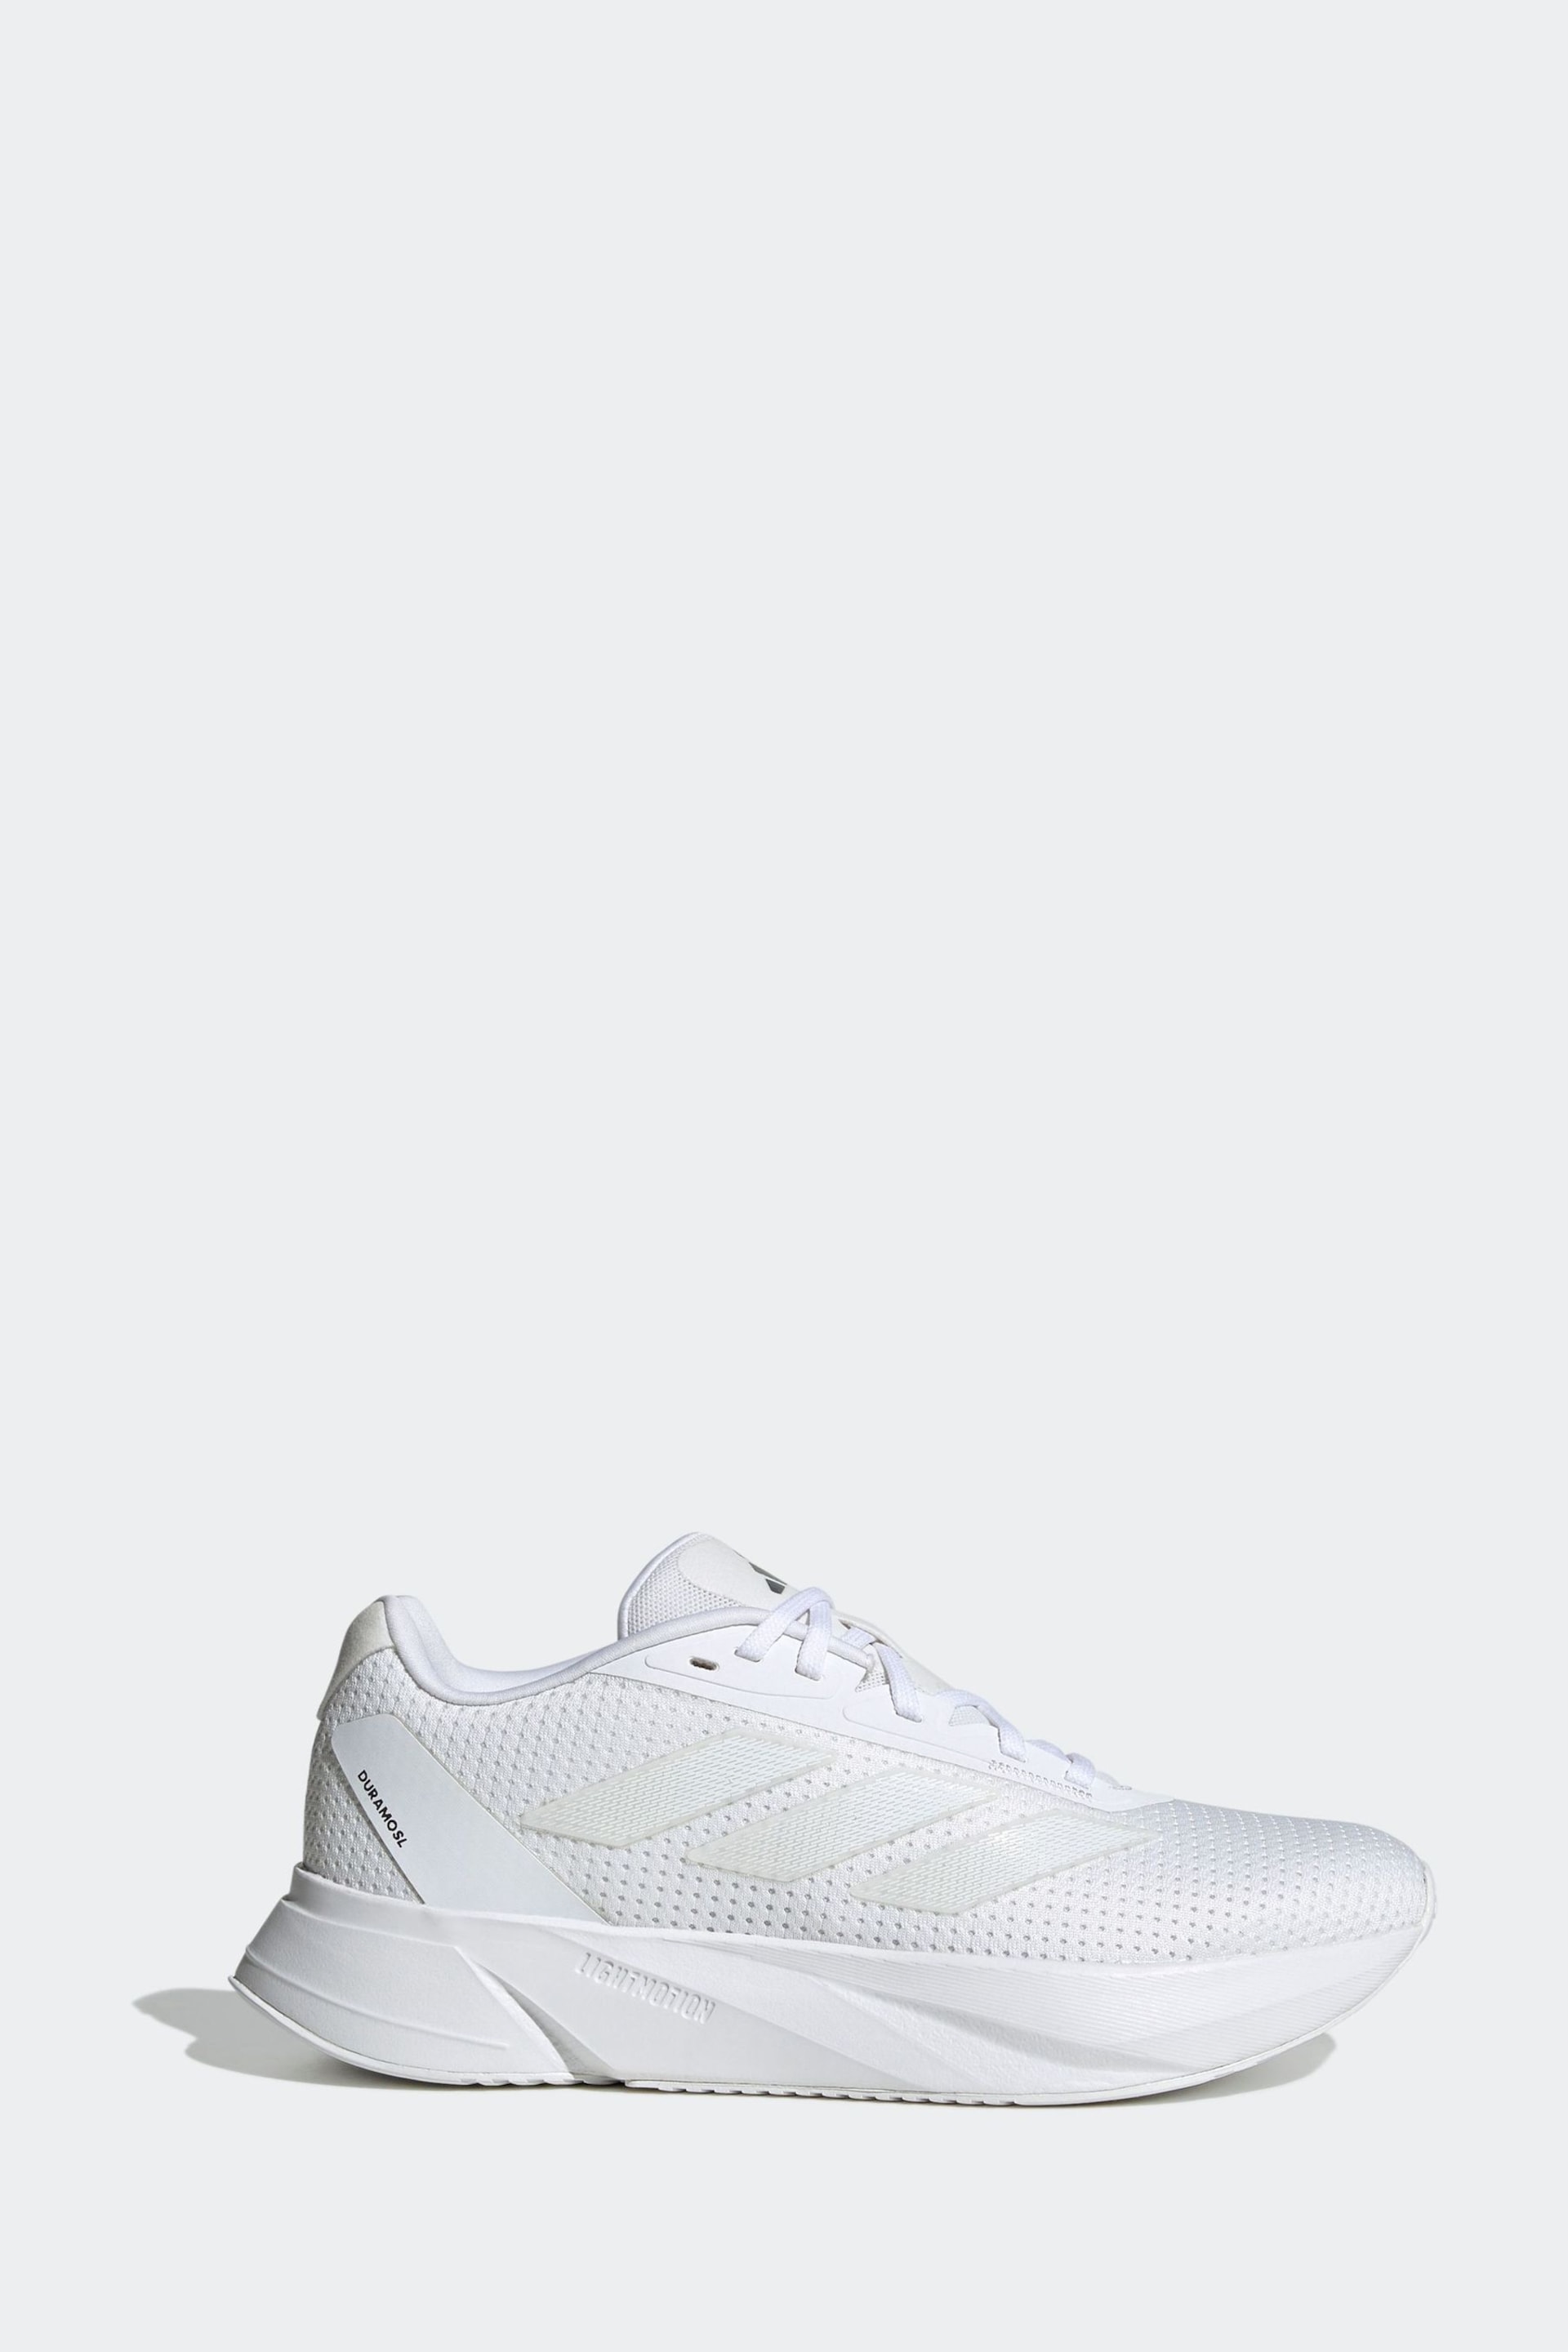 adidas Off White Duramo Running Shoes - Image 1 of 10